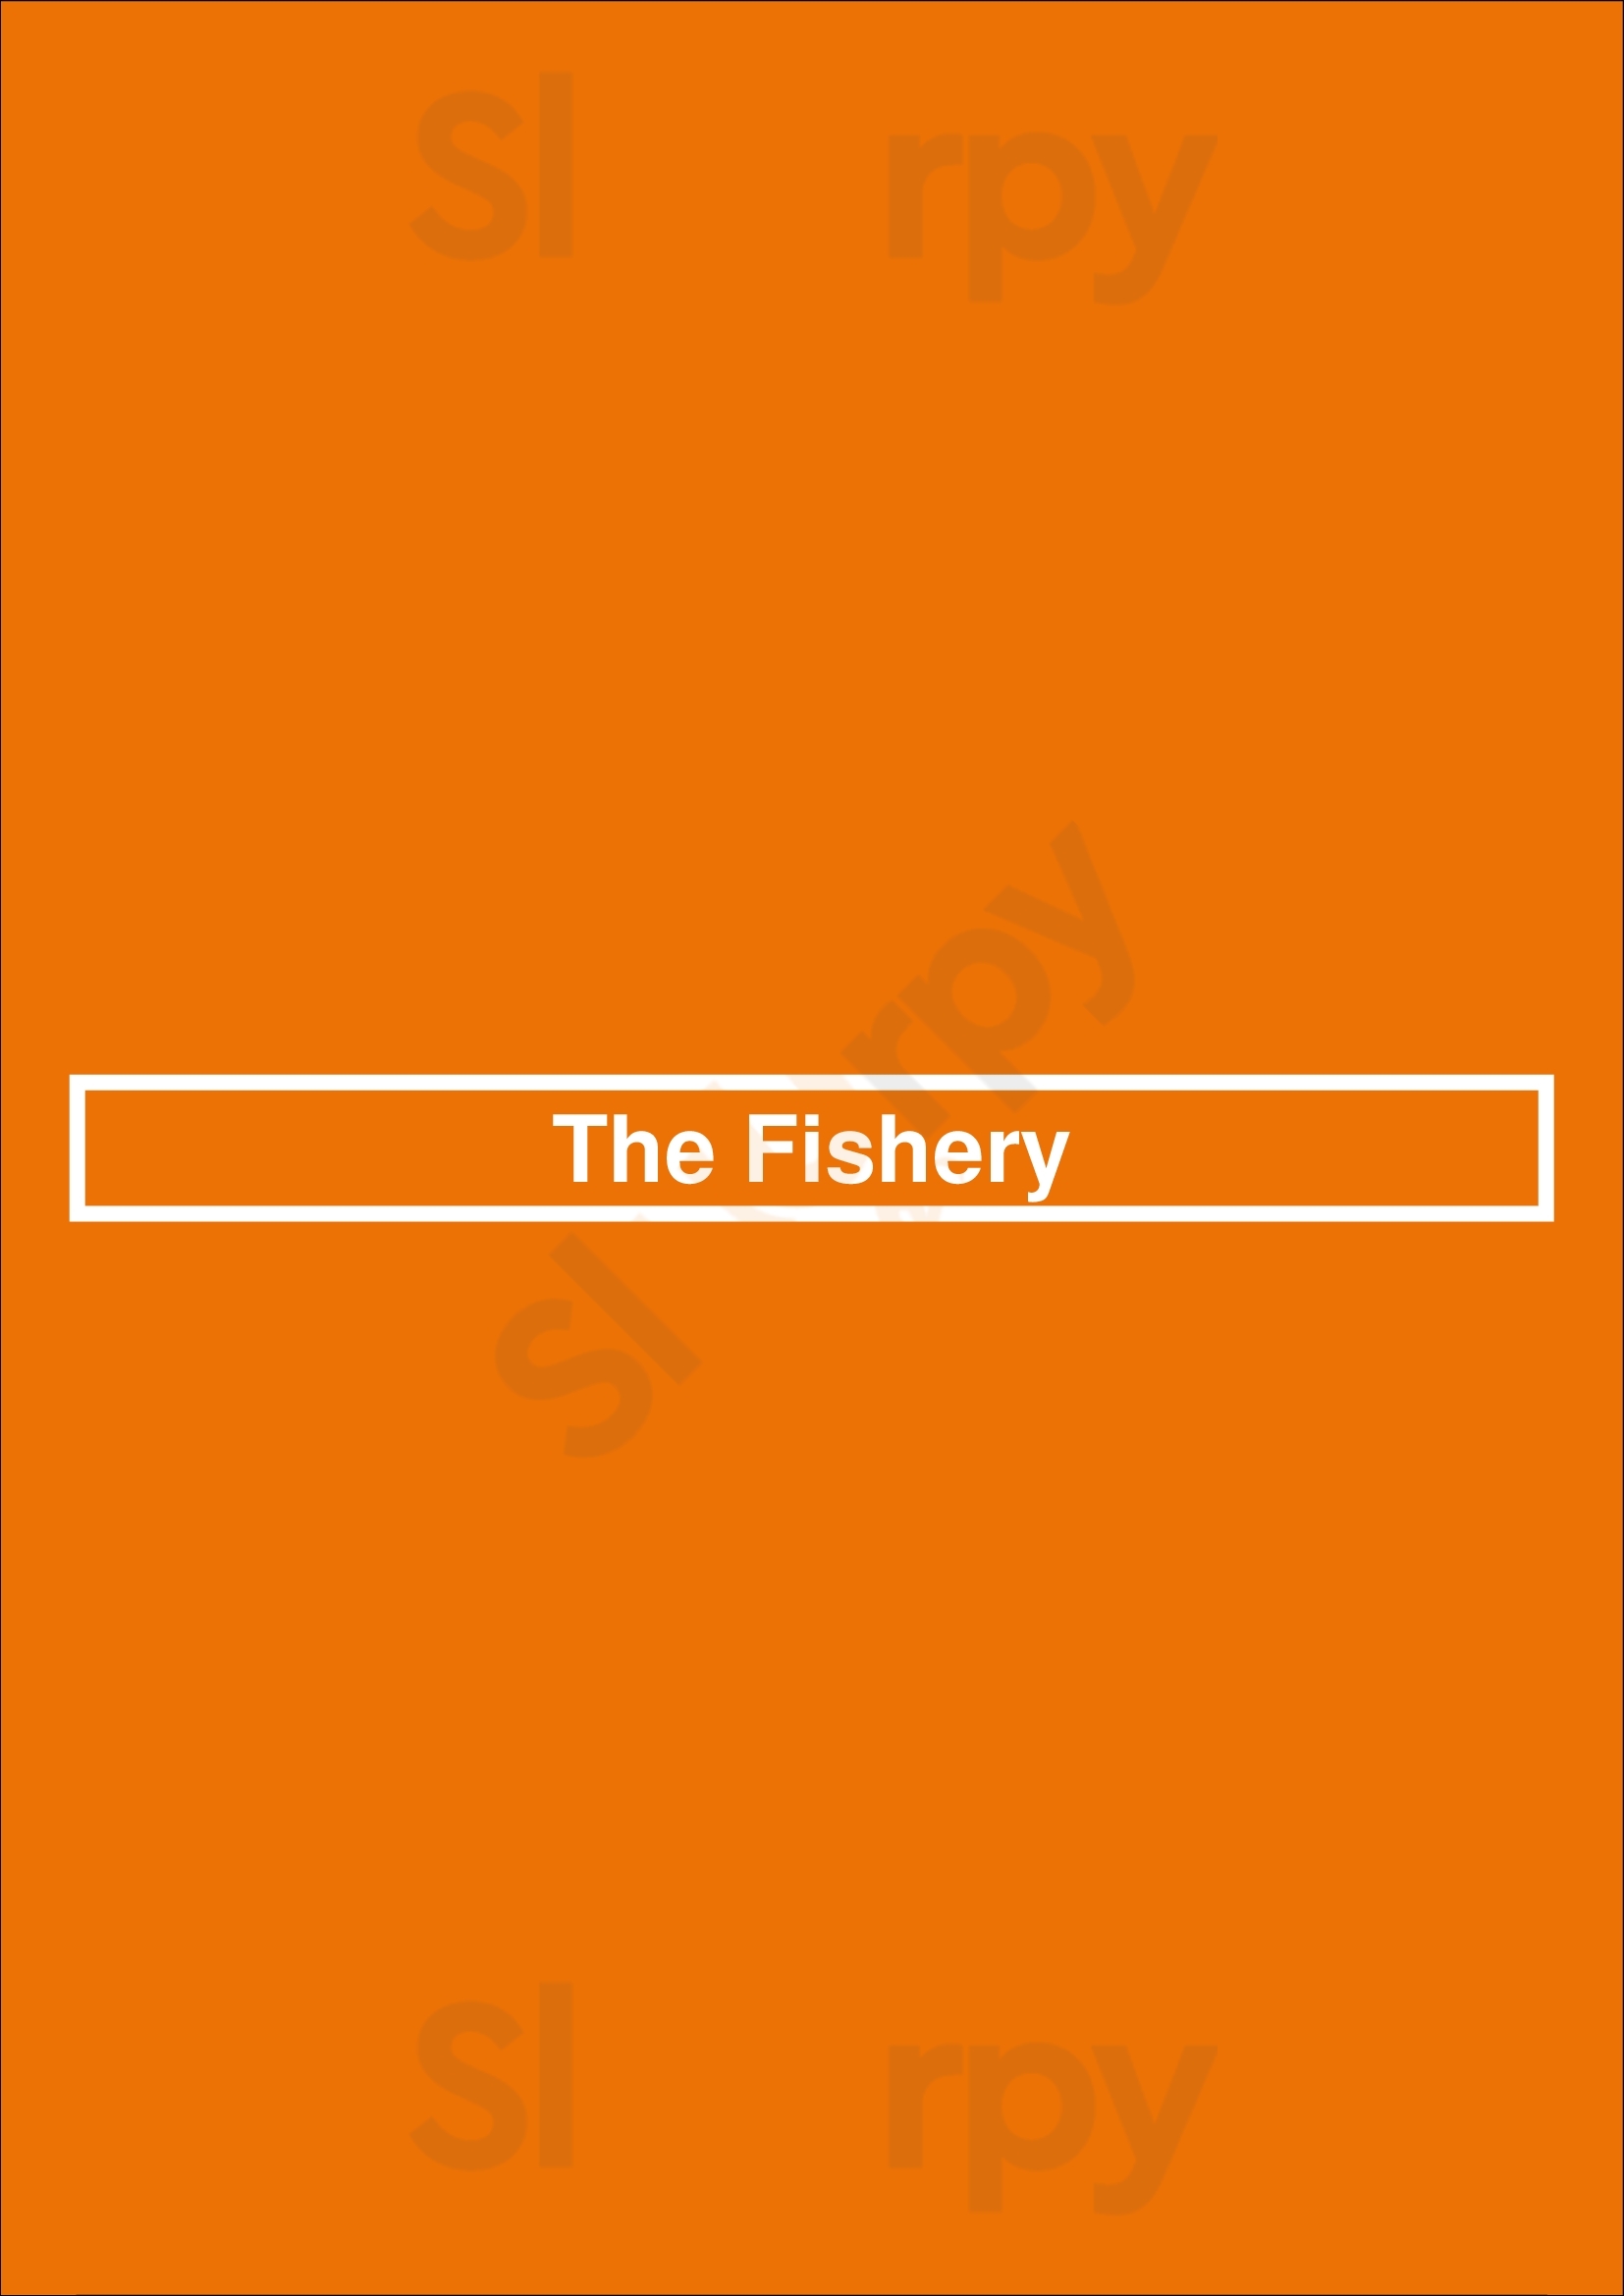 The Fishery San Diego Menu - 1